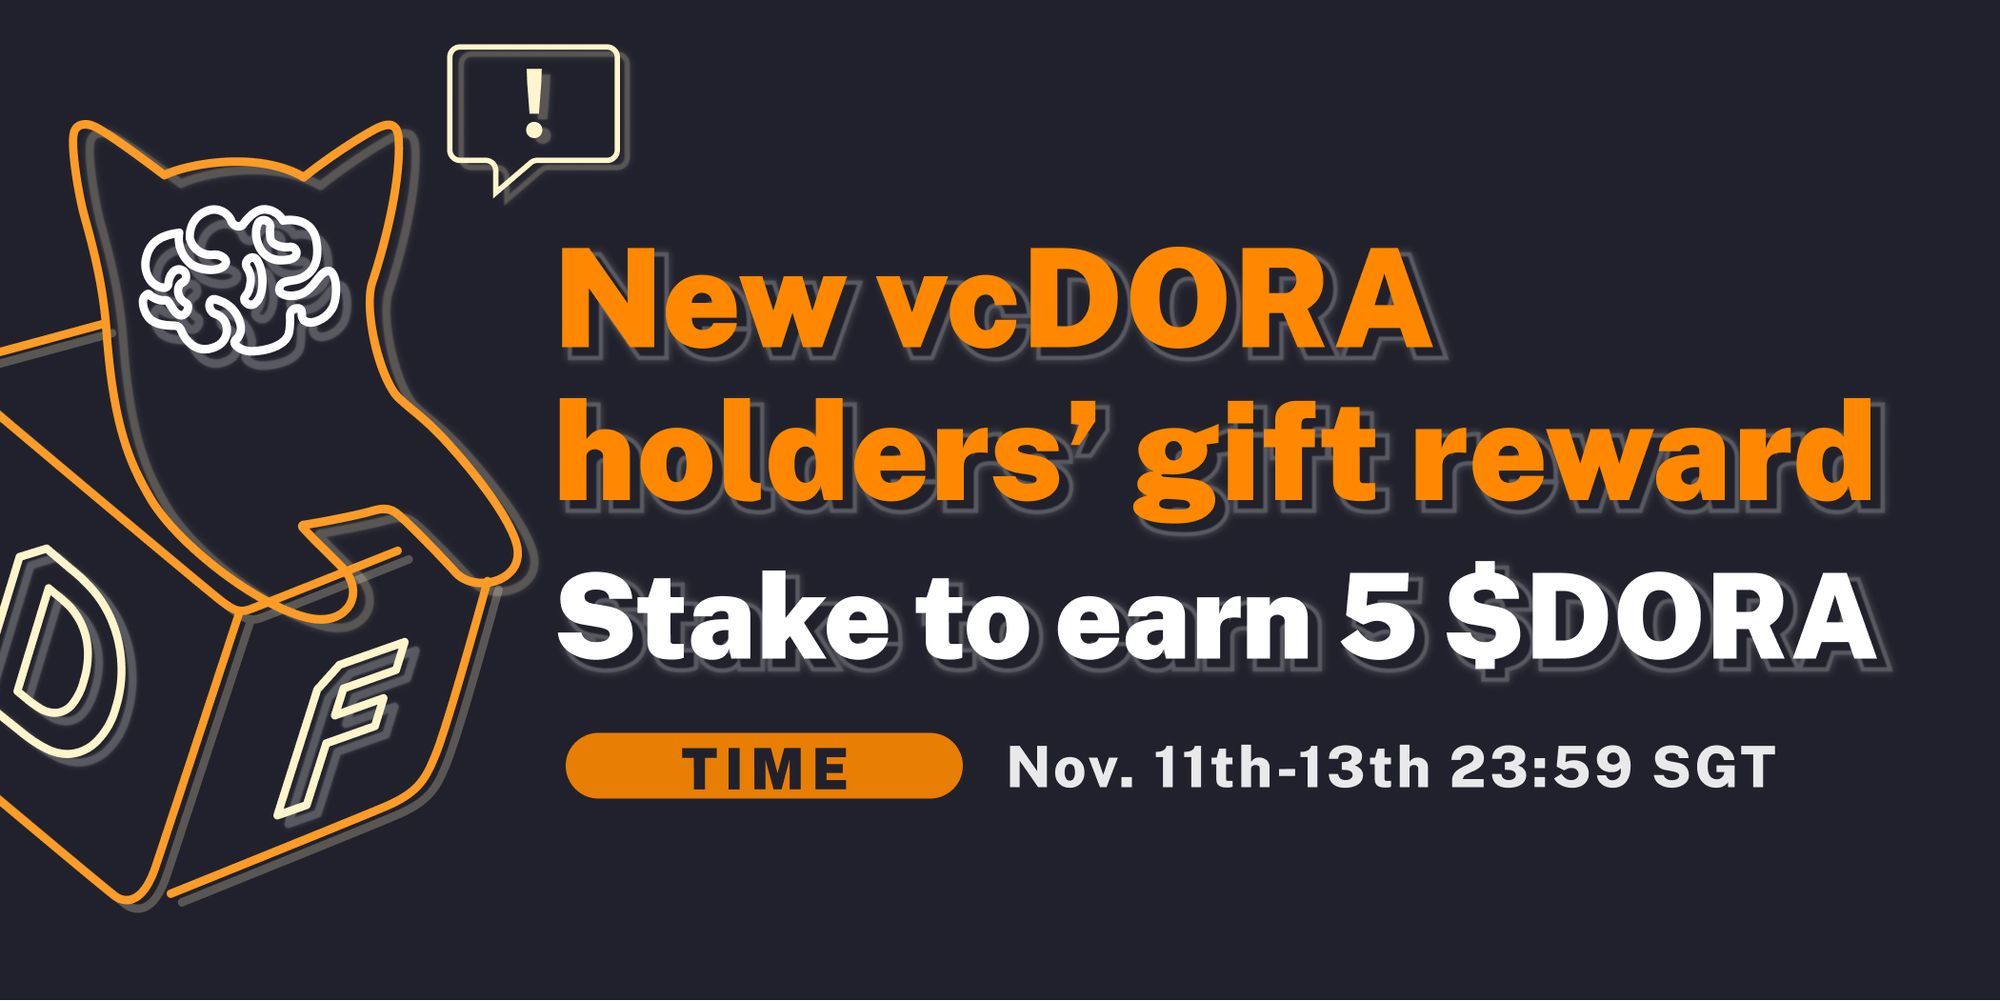 New vcDORA holders’ gift reward —stake to earn 5 $DORA